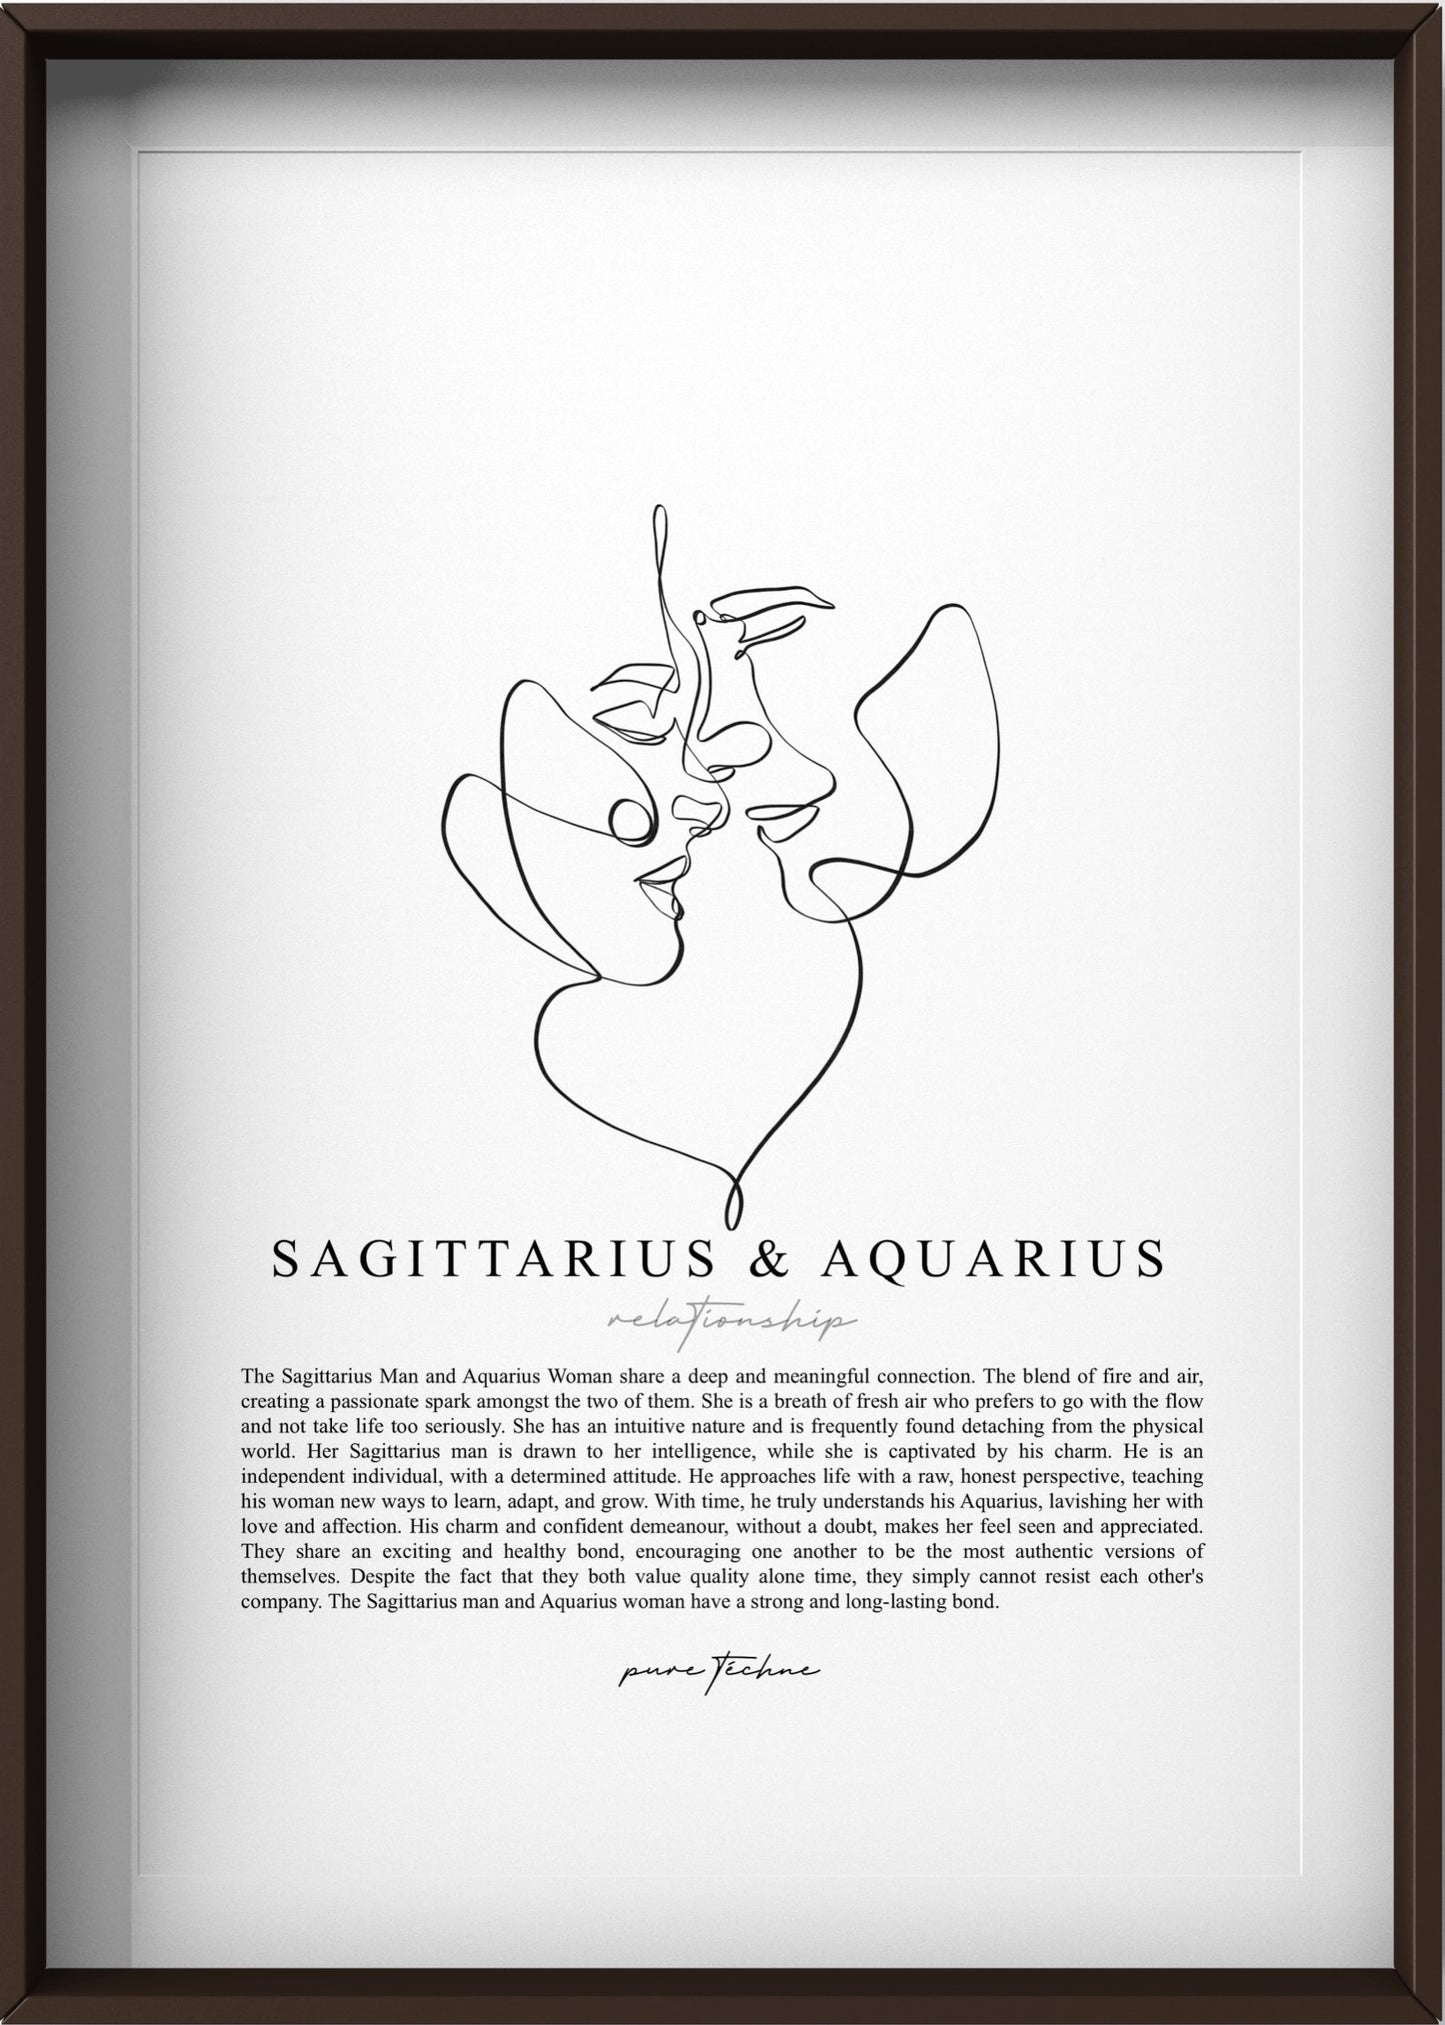 Sagittarius Man & Aquarius Woman